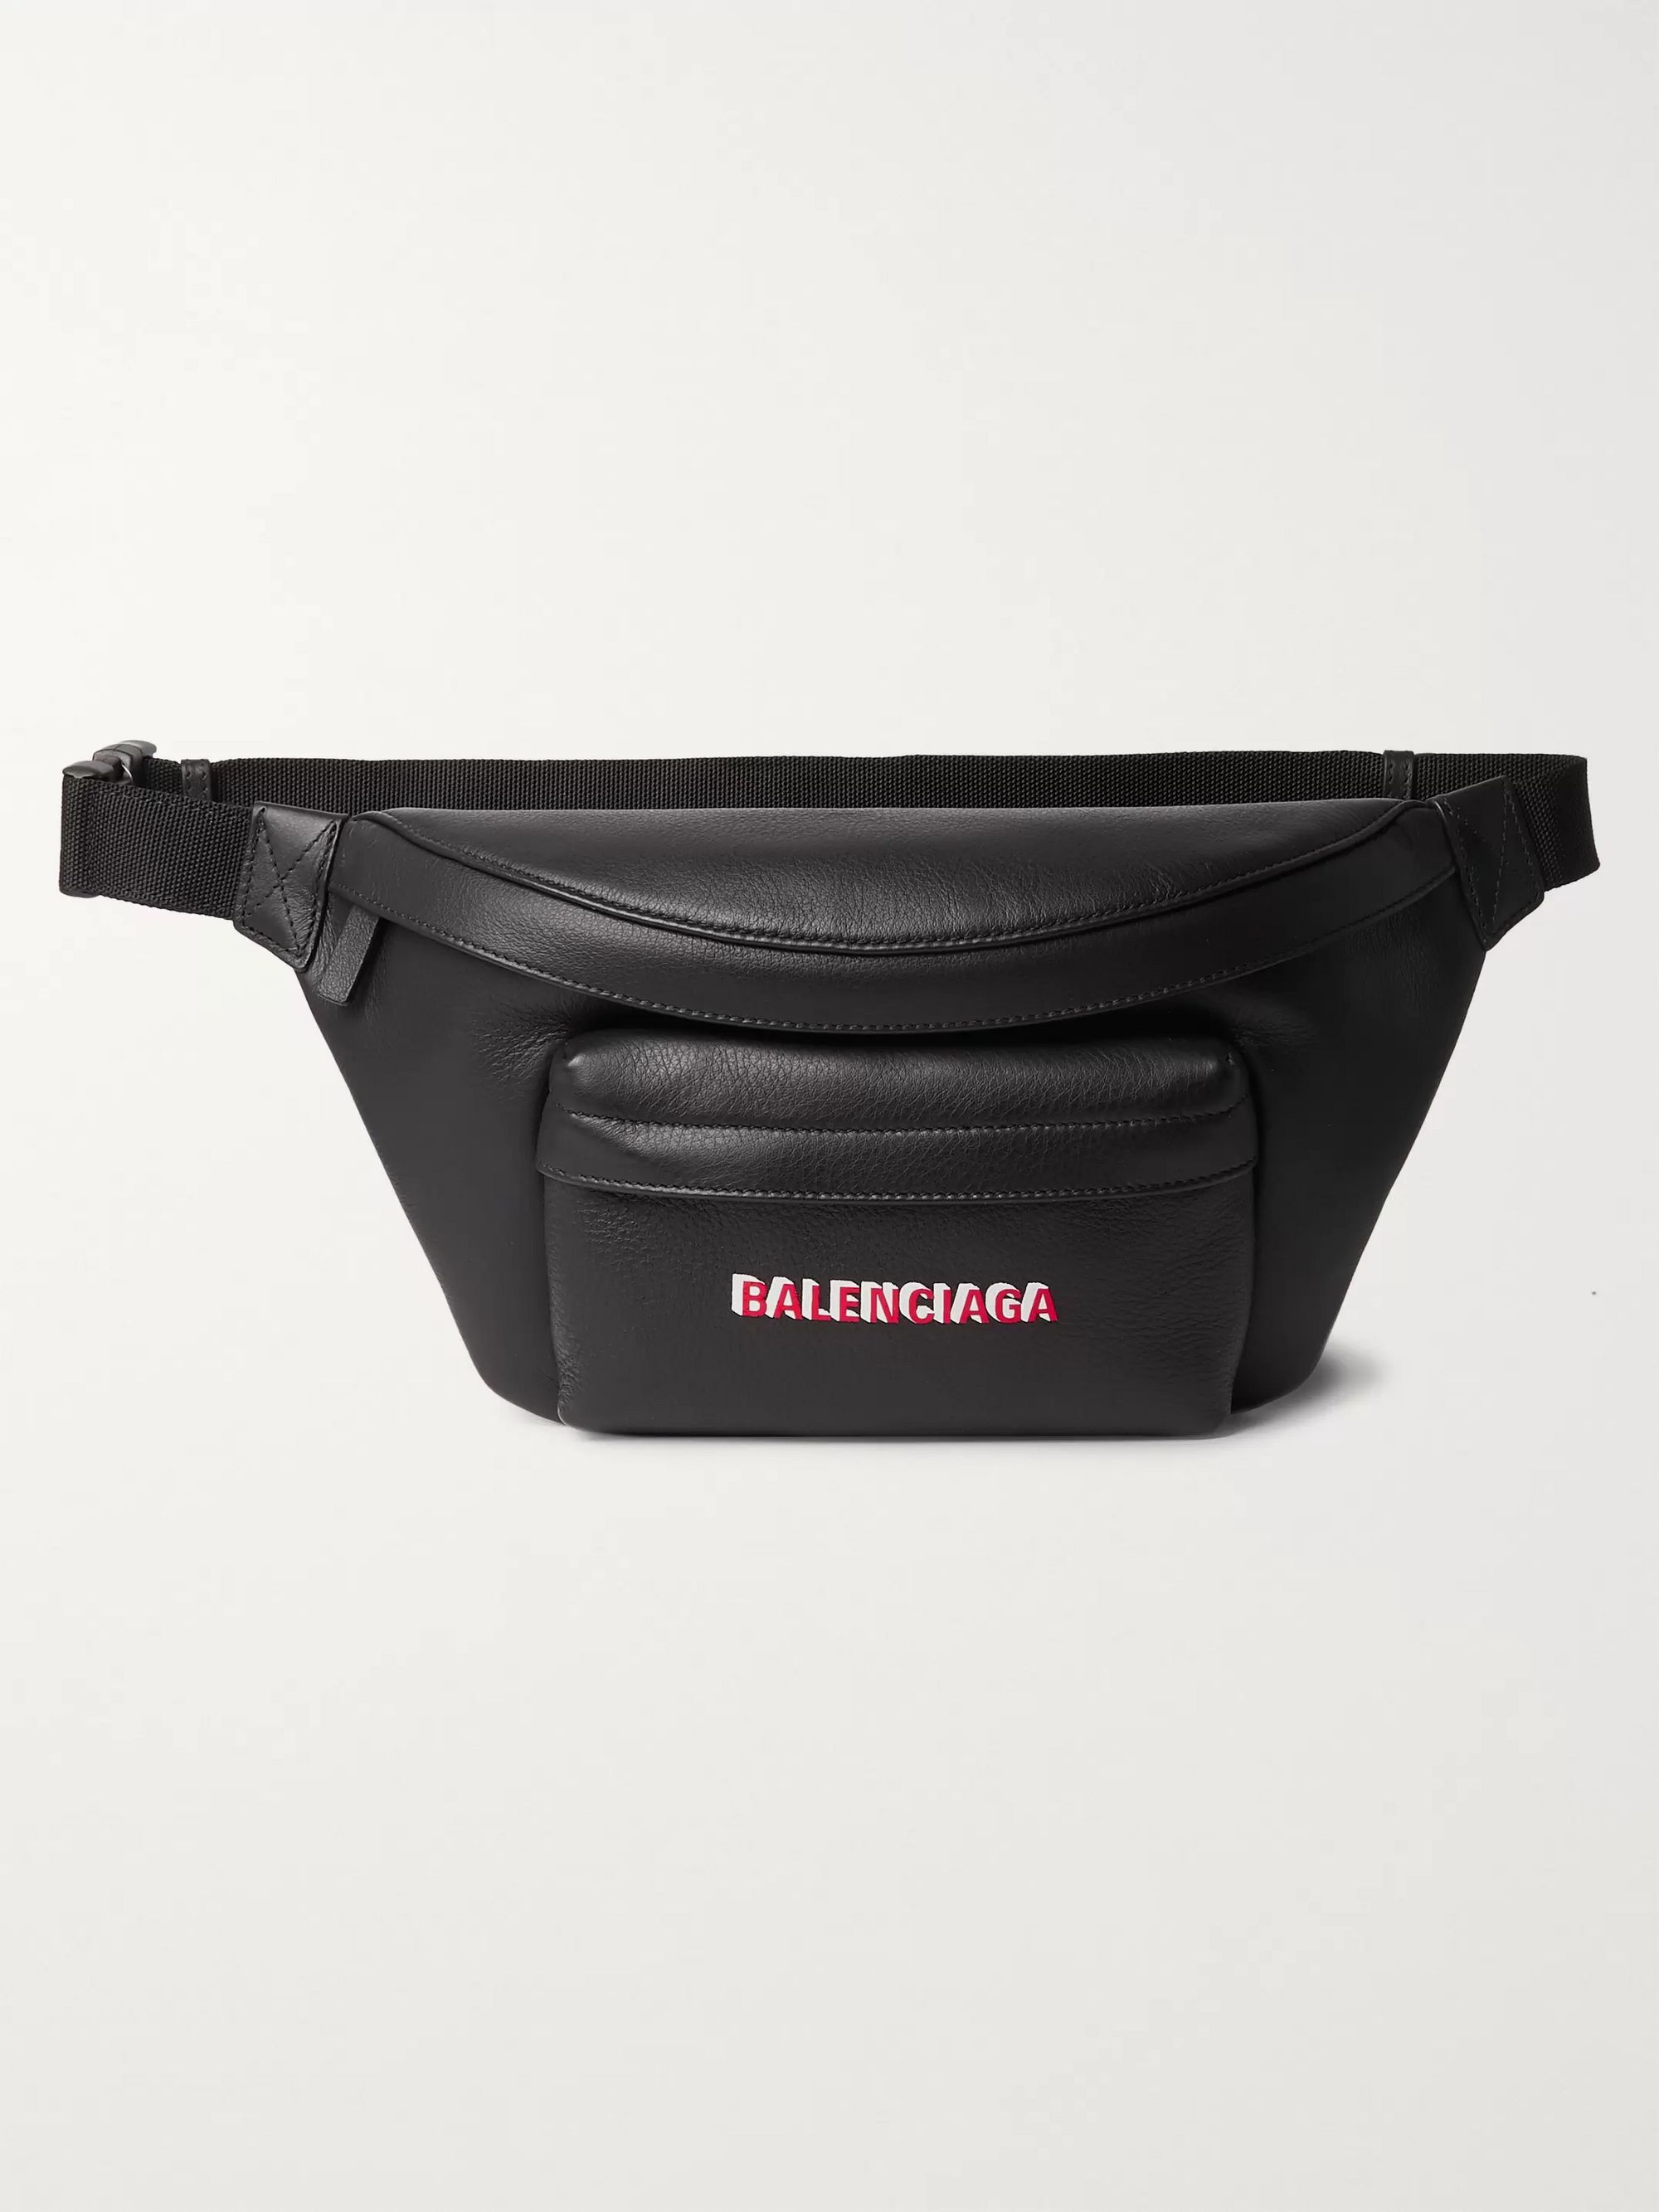 balenciaga everyday belt bag